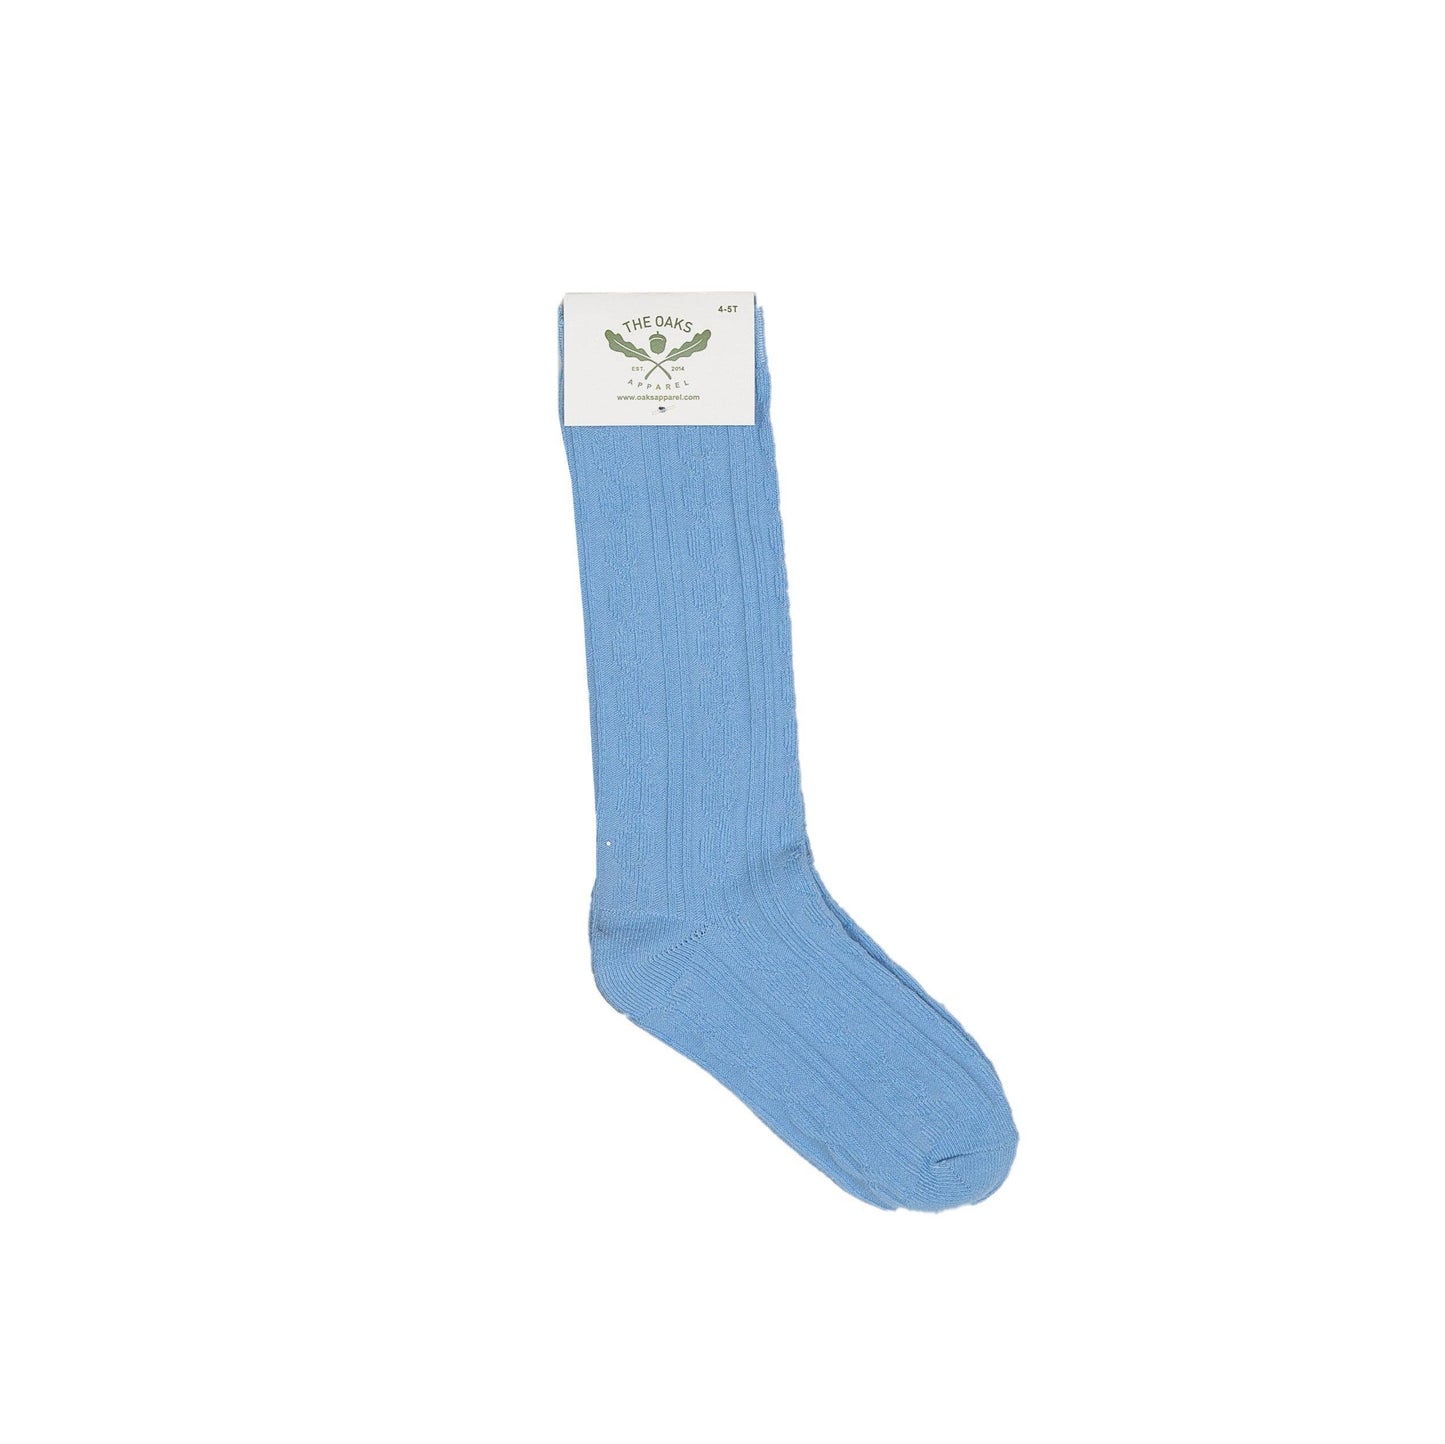 Lt Blue Braided Socks